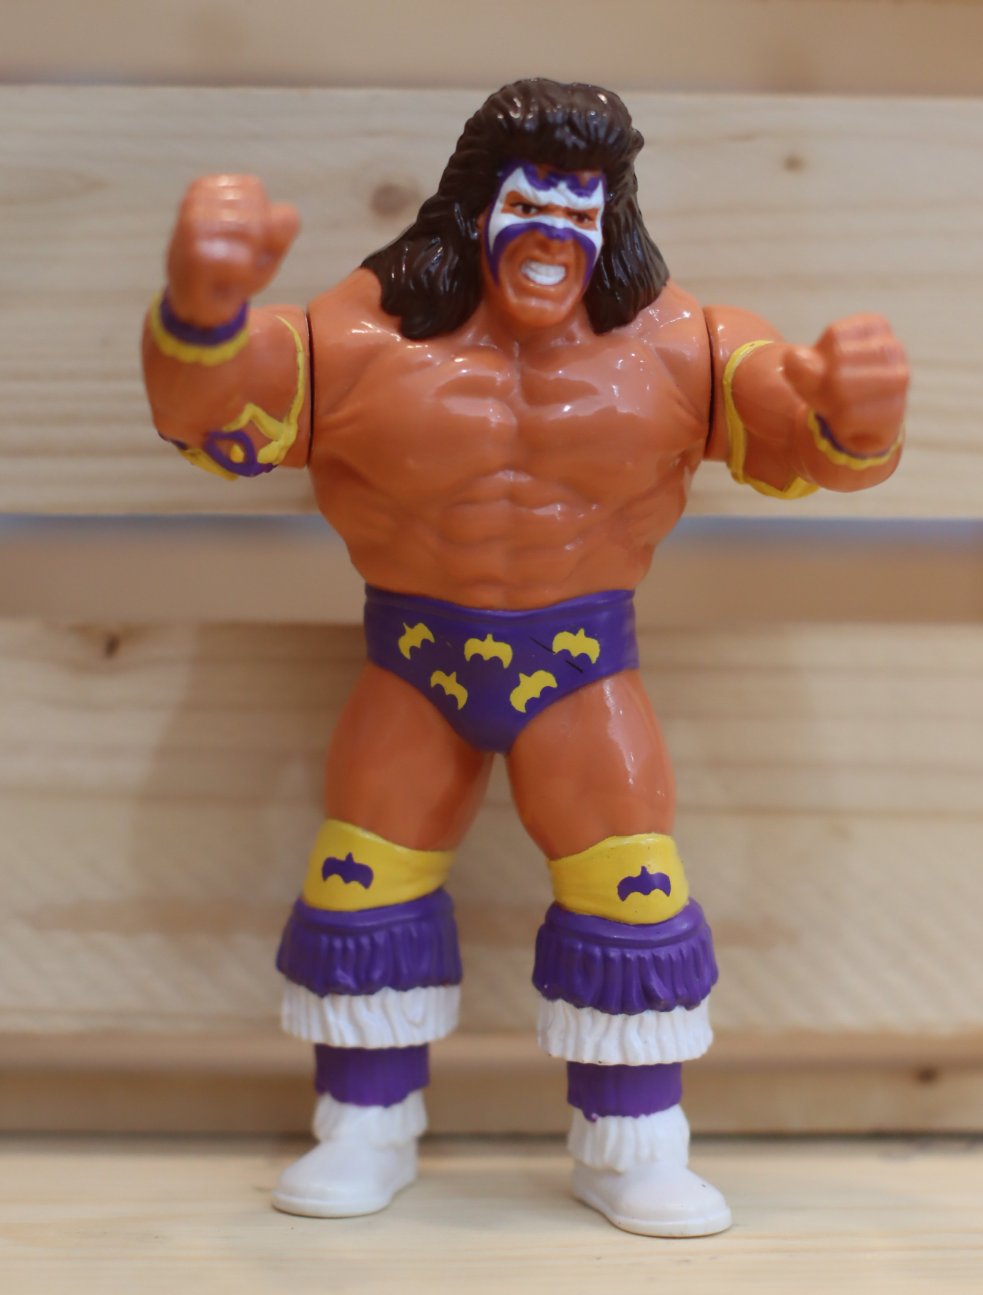 1991 Hasbro Ultimate Warrior Purple Rare Loose Wrestling Figure Mint!